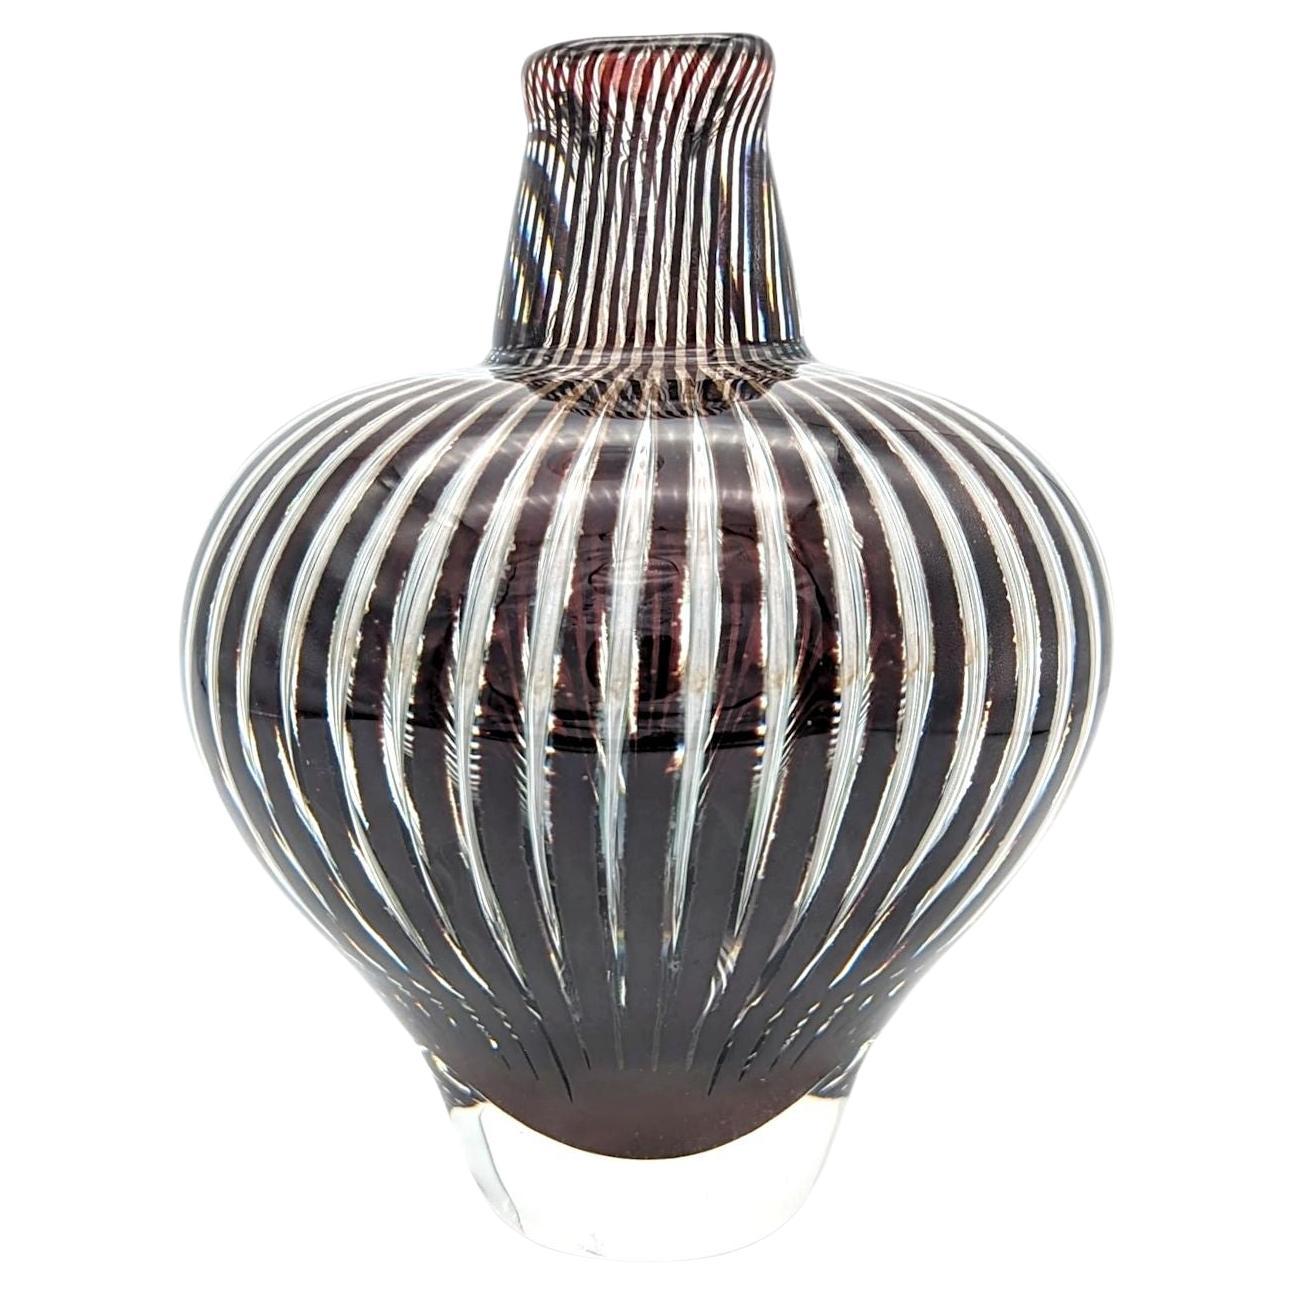 An abstract "Ariel" glass vase, by Edvin Öhrström for Orrefors, Sweden, 1952